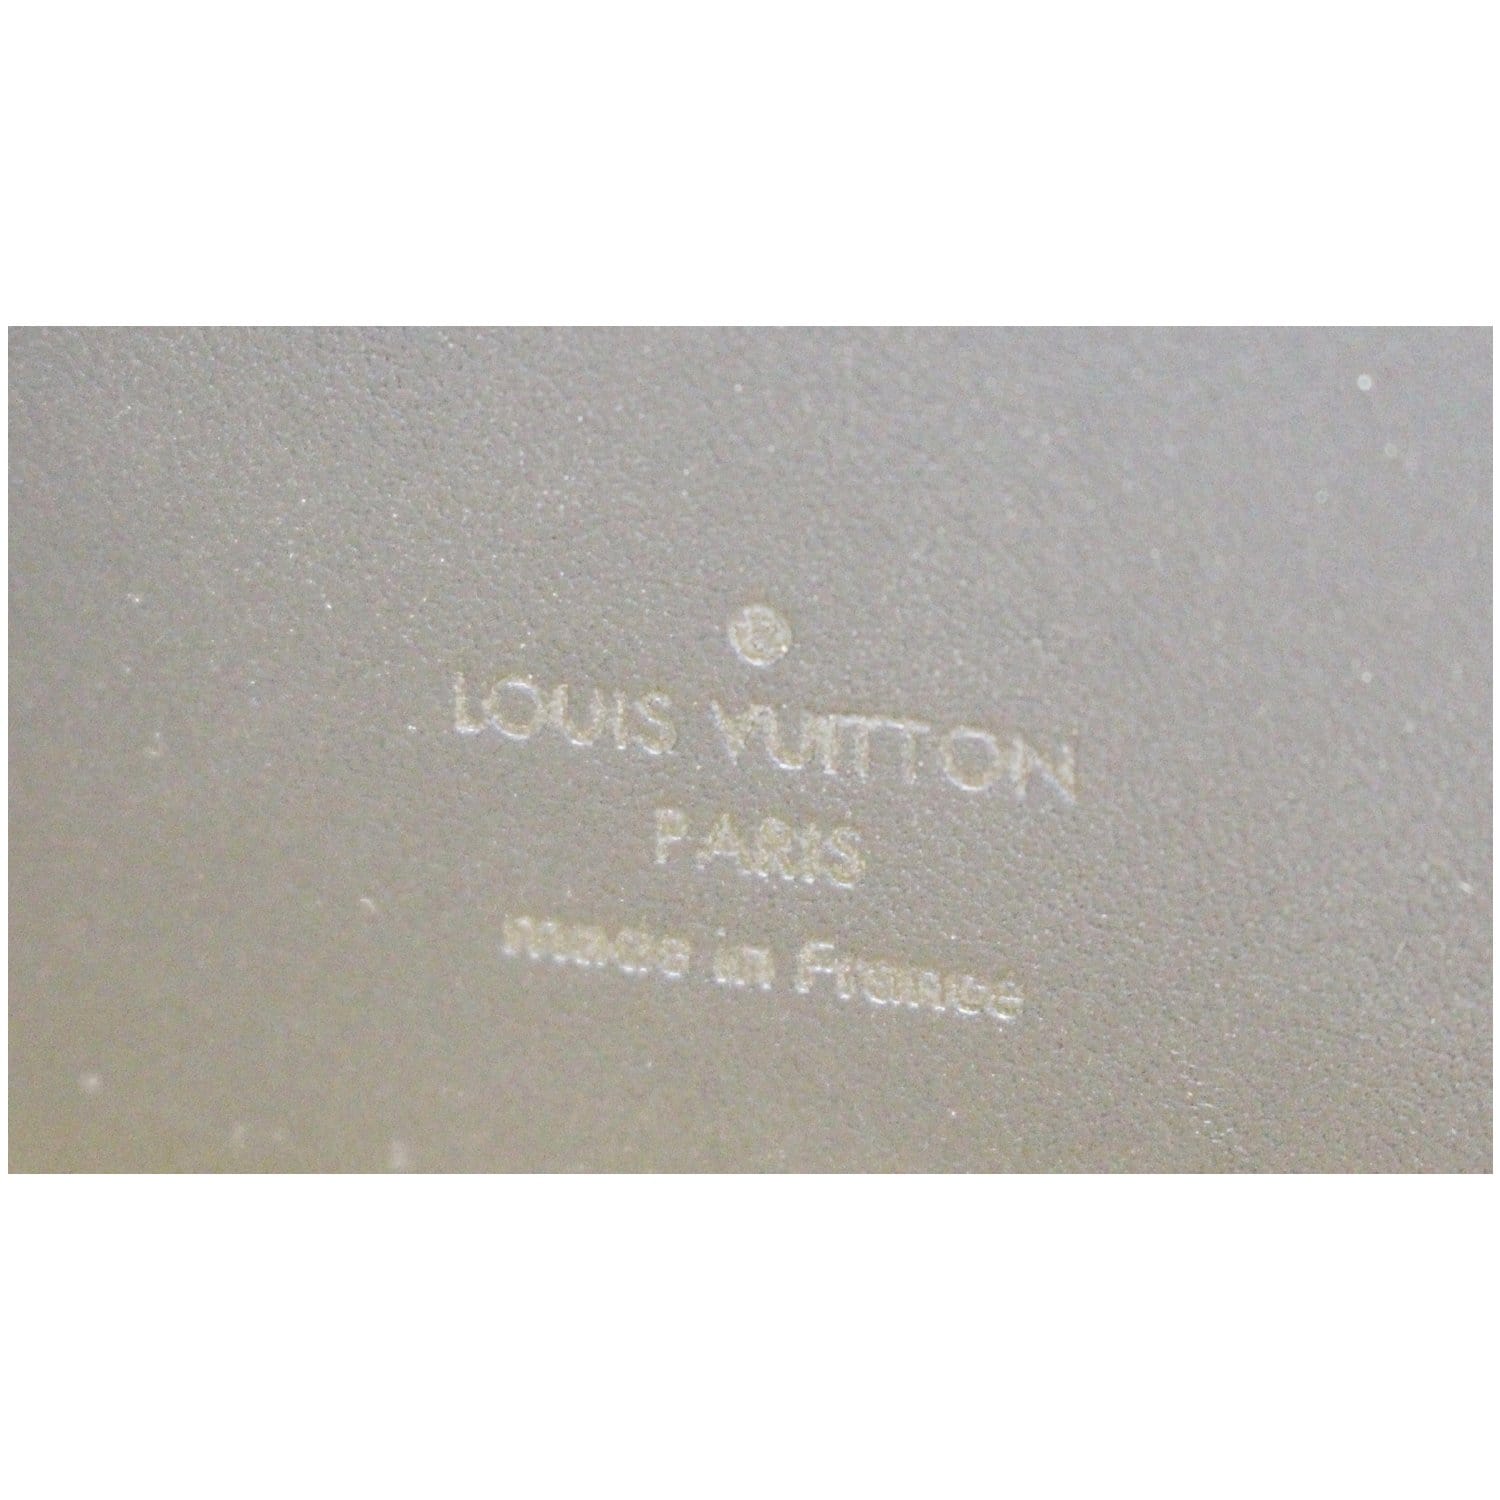 Louis Vuitton Antarctica Damier Infini Leather Pocket Organizer